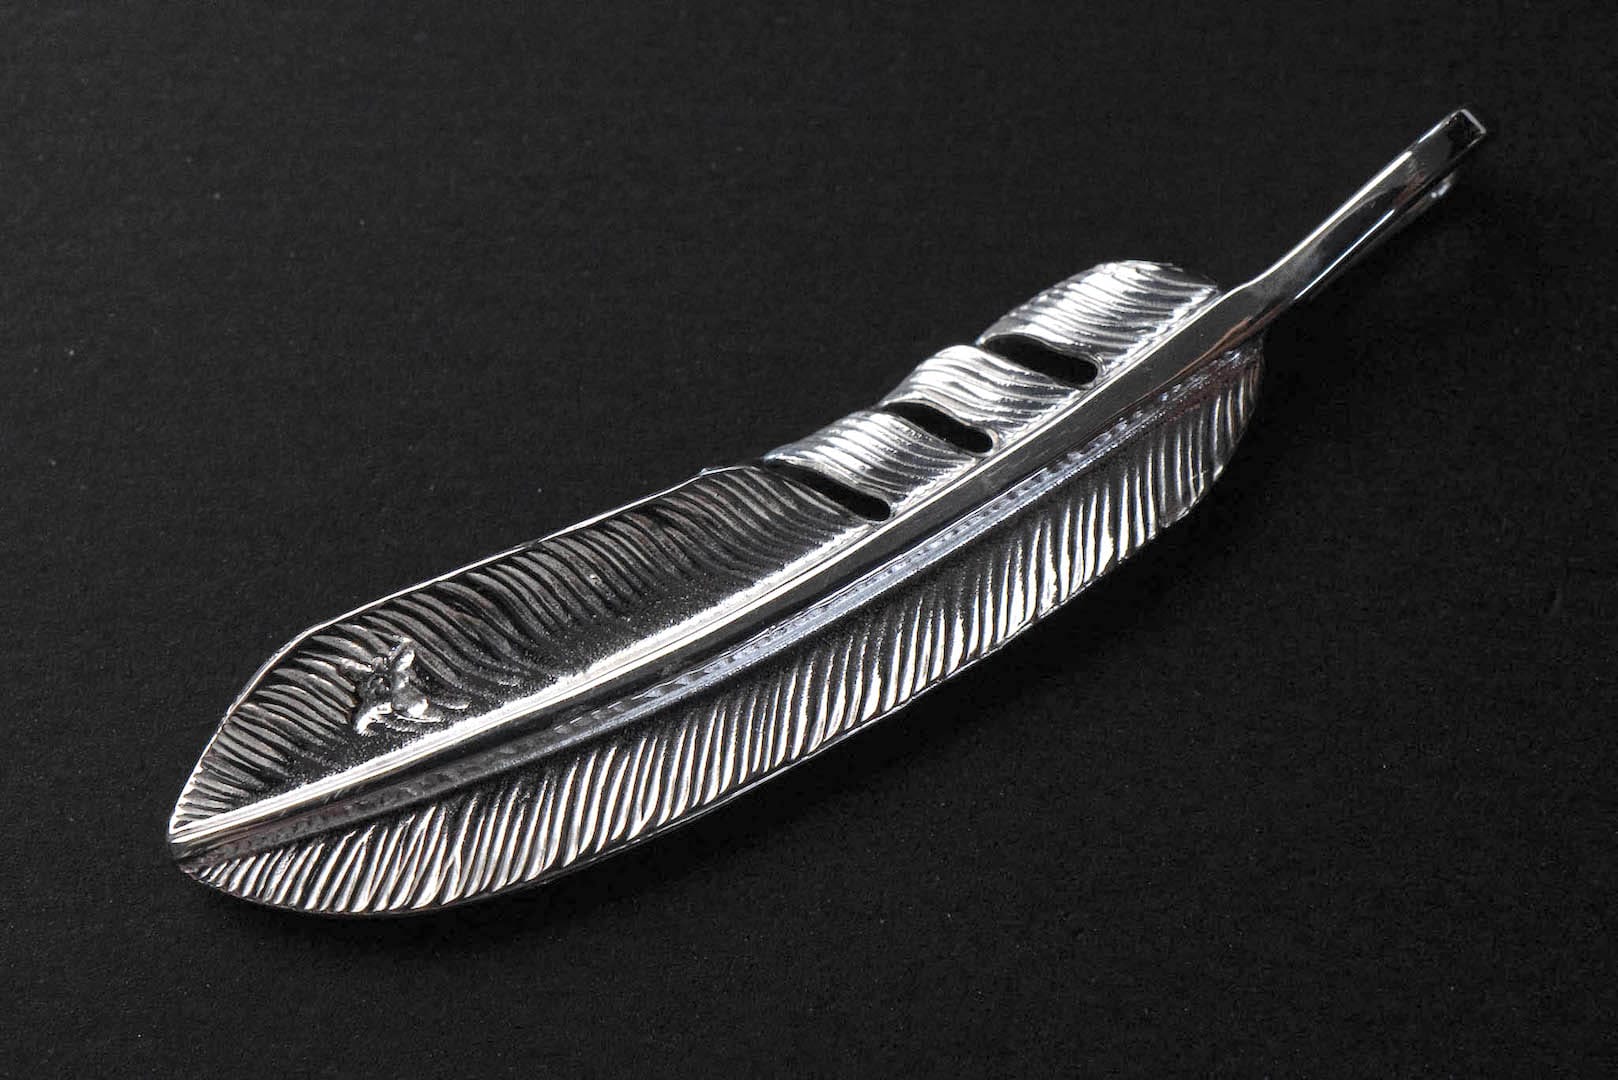 First Arrow's "Medium Feather" Silver Pendant (P-519)